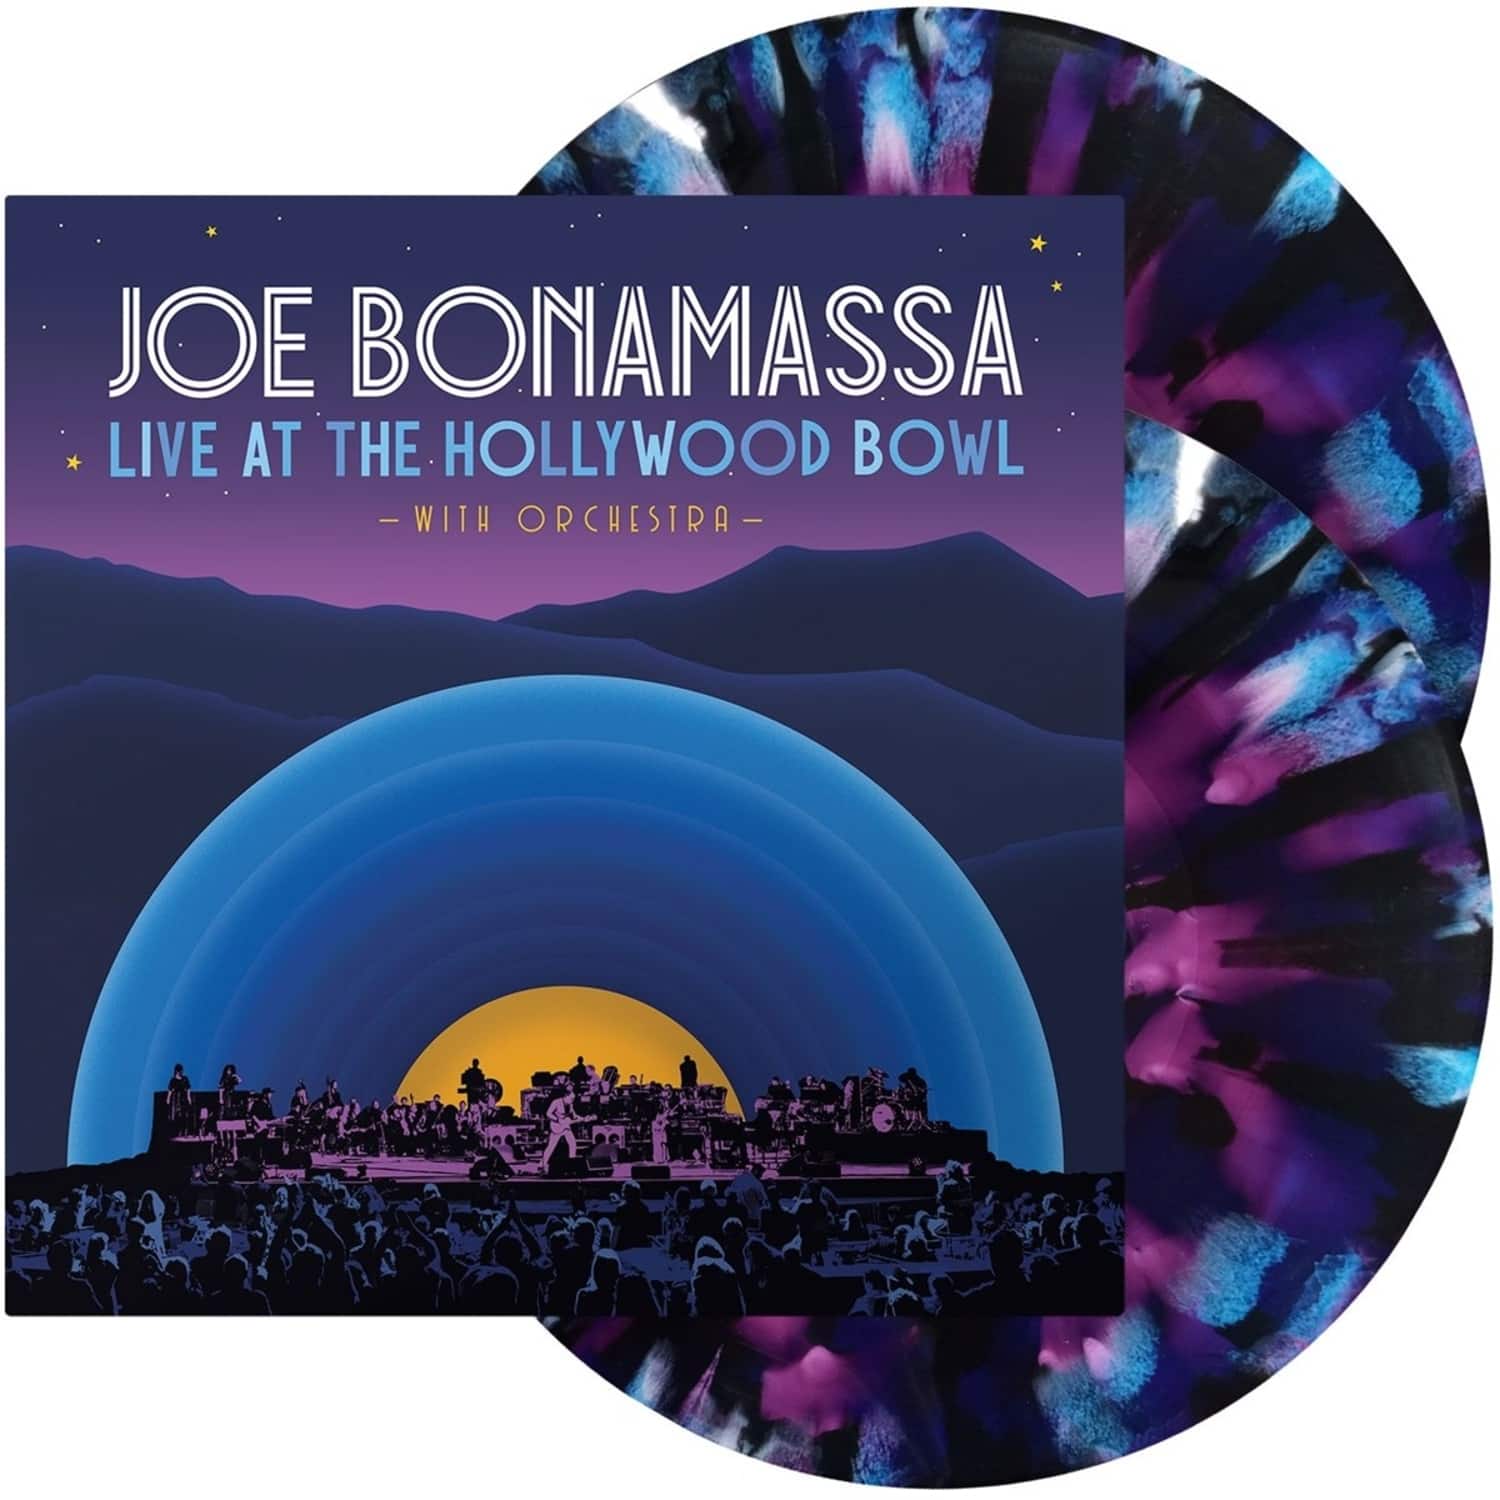 Joe Bonamassa - LIVE AT THE HOLLYWOOD BOWL WITH ORCHESTRA 